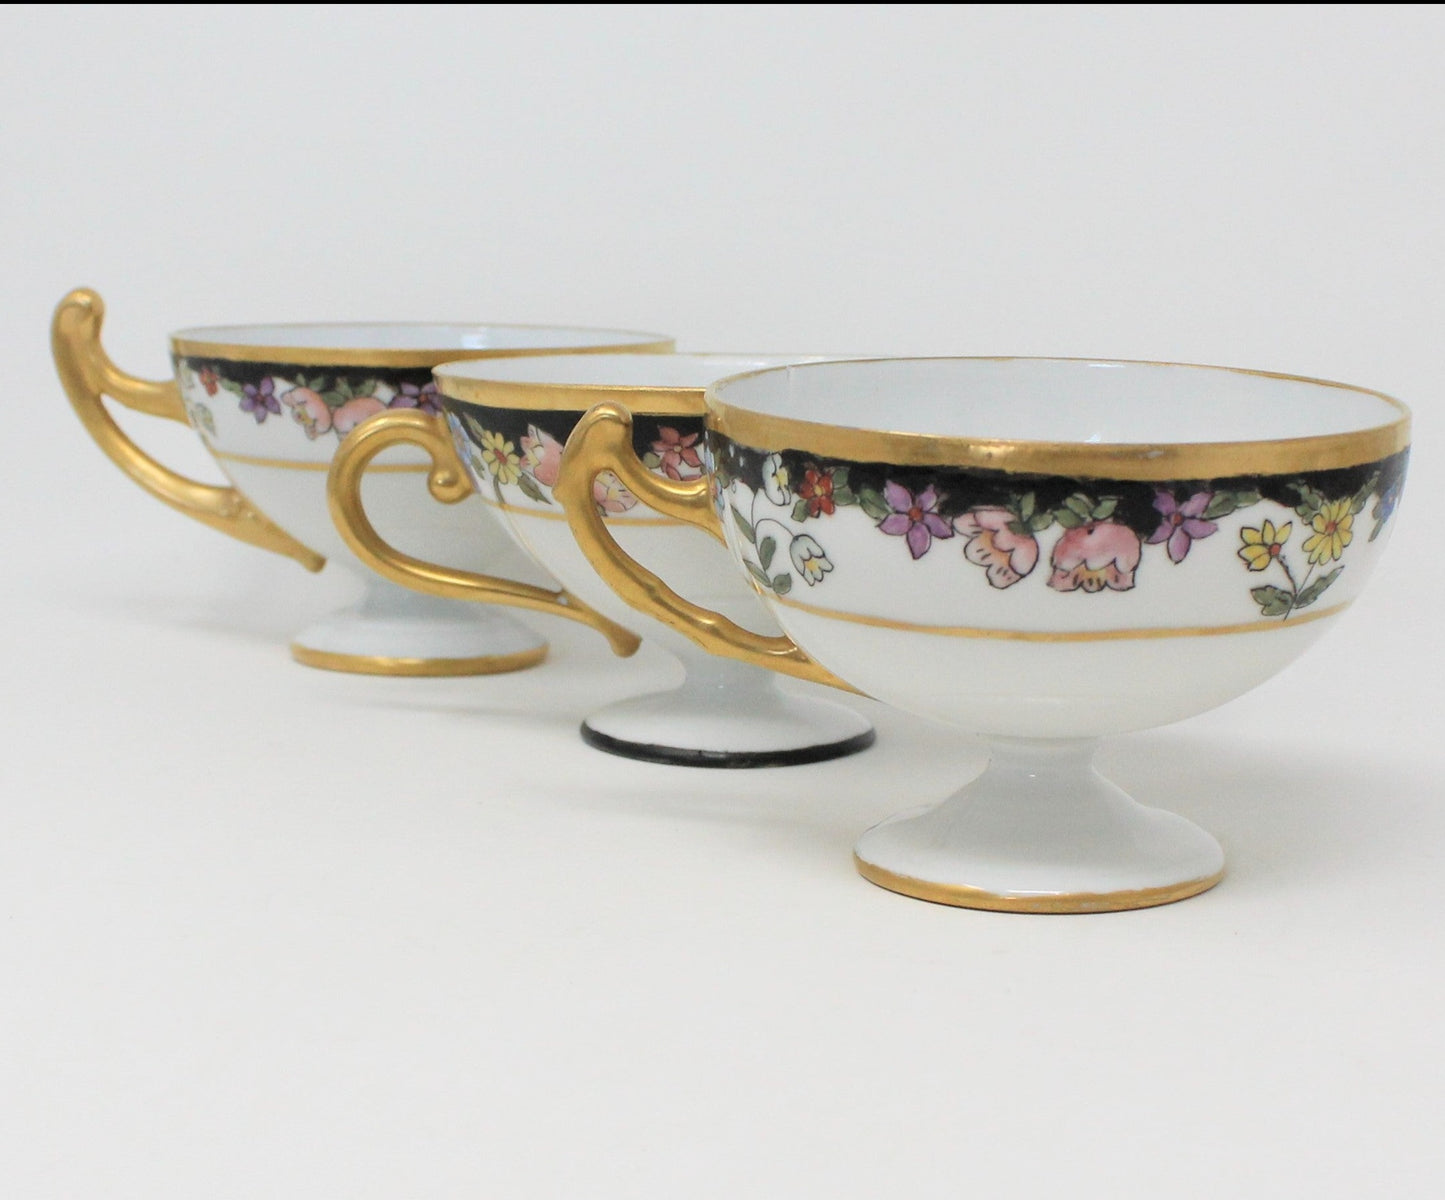 Teacups, CT Altwasser, Hand Painted Florals, Set of 2, Czechoslovakia, Vintage